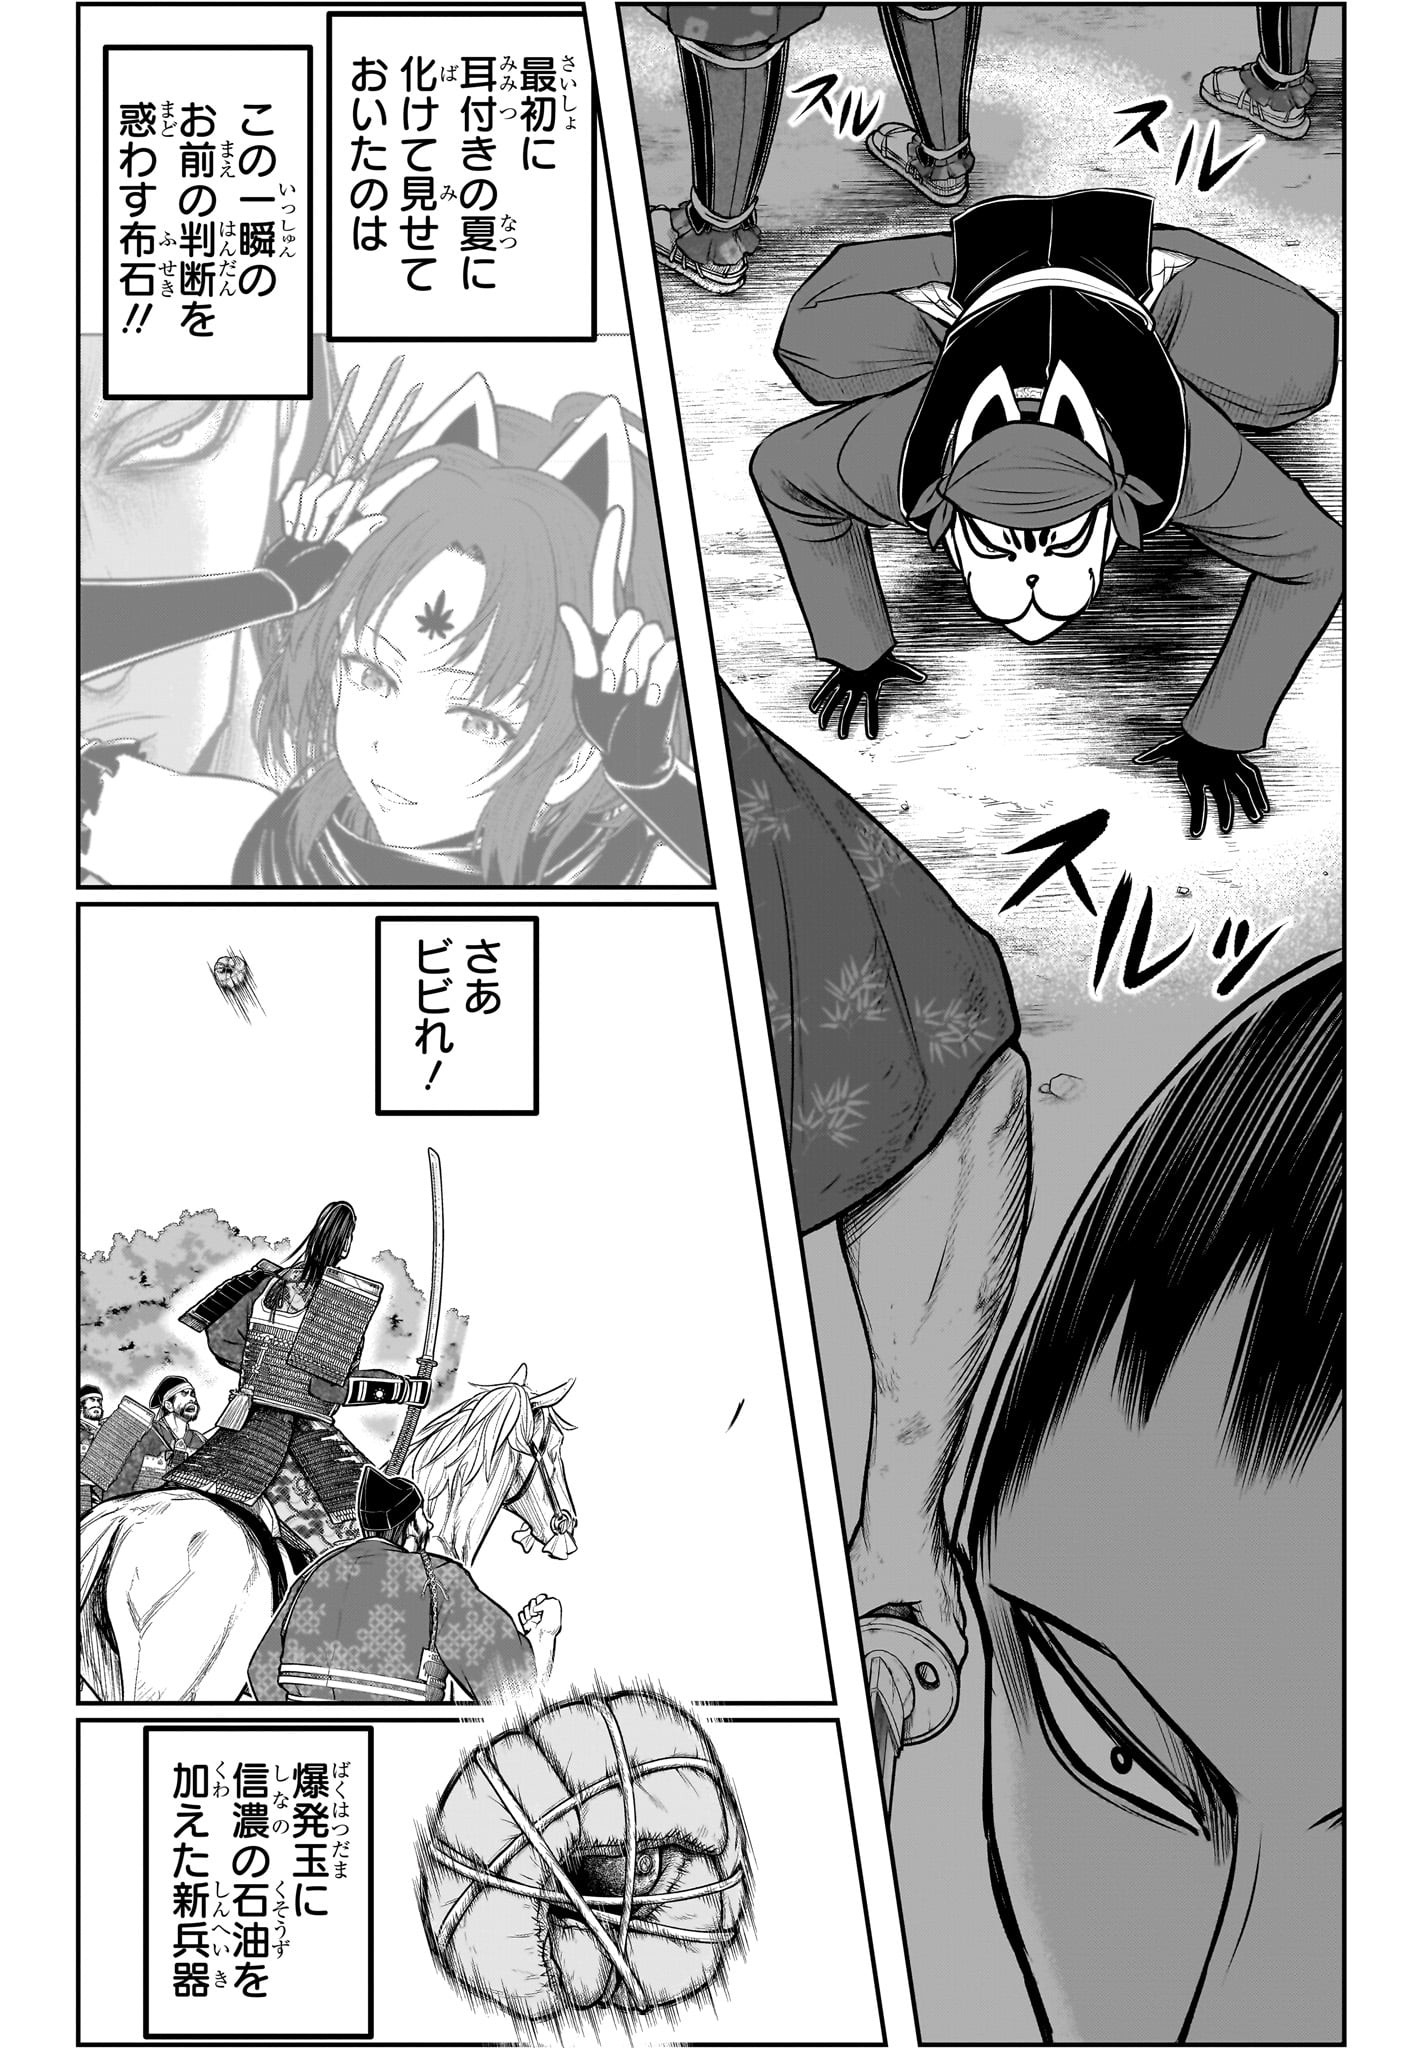 Nige Jouzu no Wakagimi - Chapter 164 - Page 10